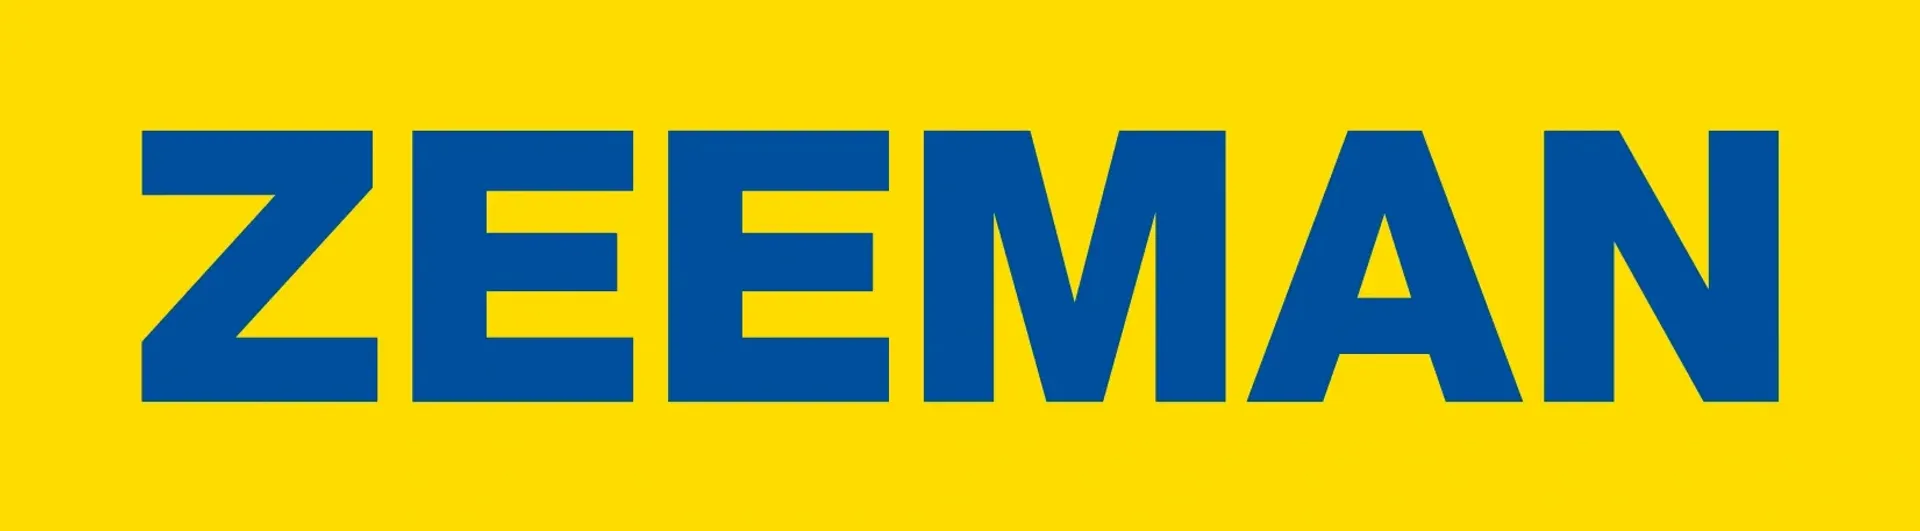 ZEEMAN logo de catálogo